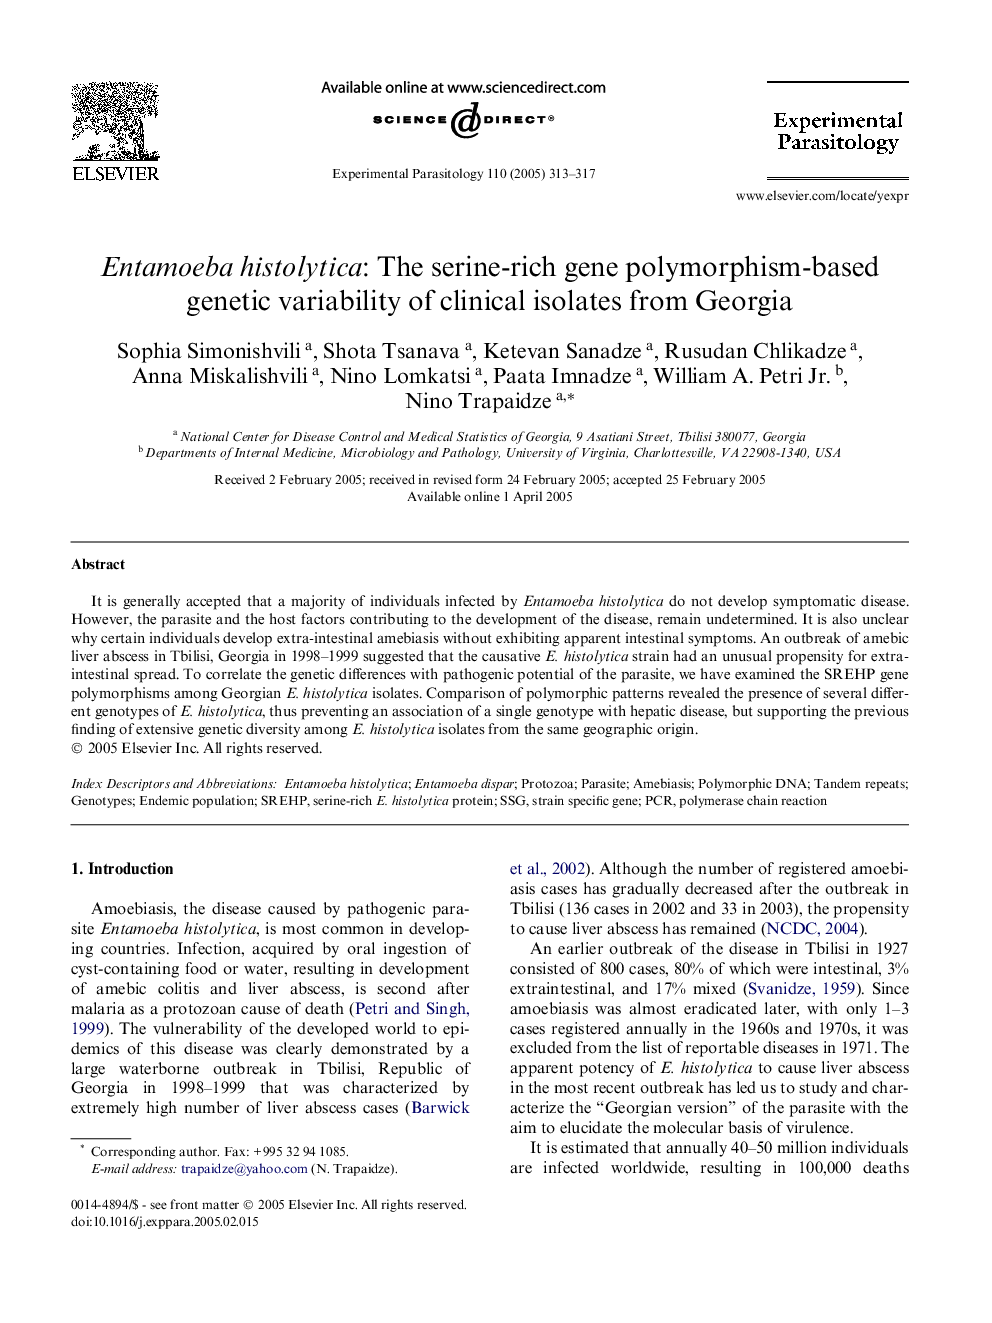 Entamoeba histolytica: The serine-rich gene polymorphism-based genetic variability of clinical isolates from Georgia